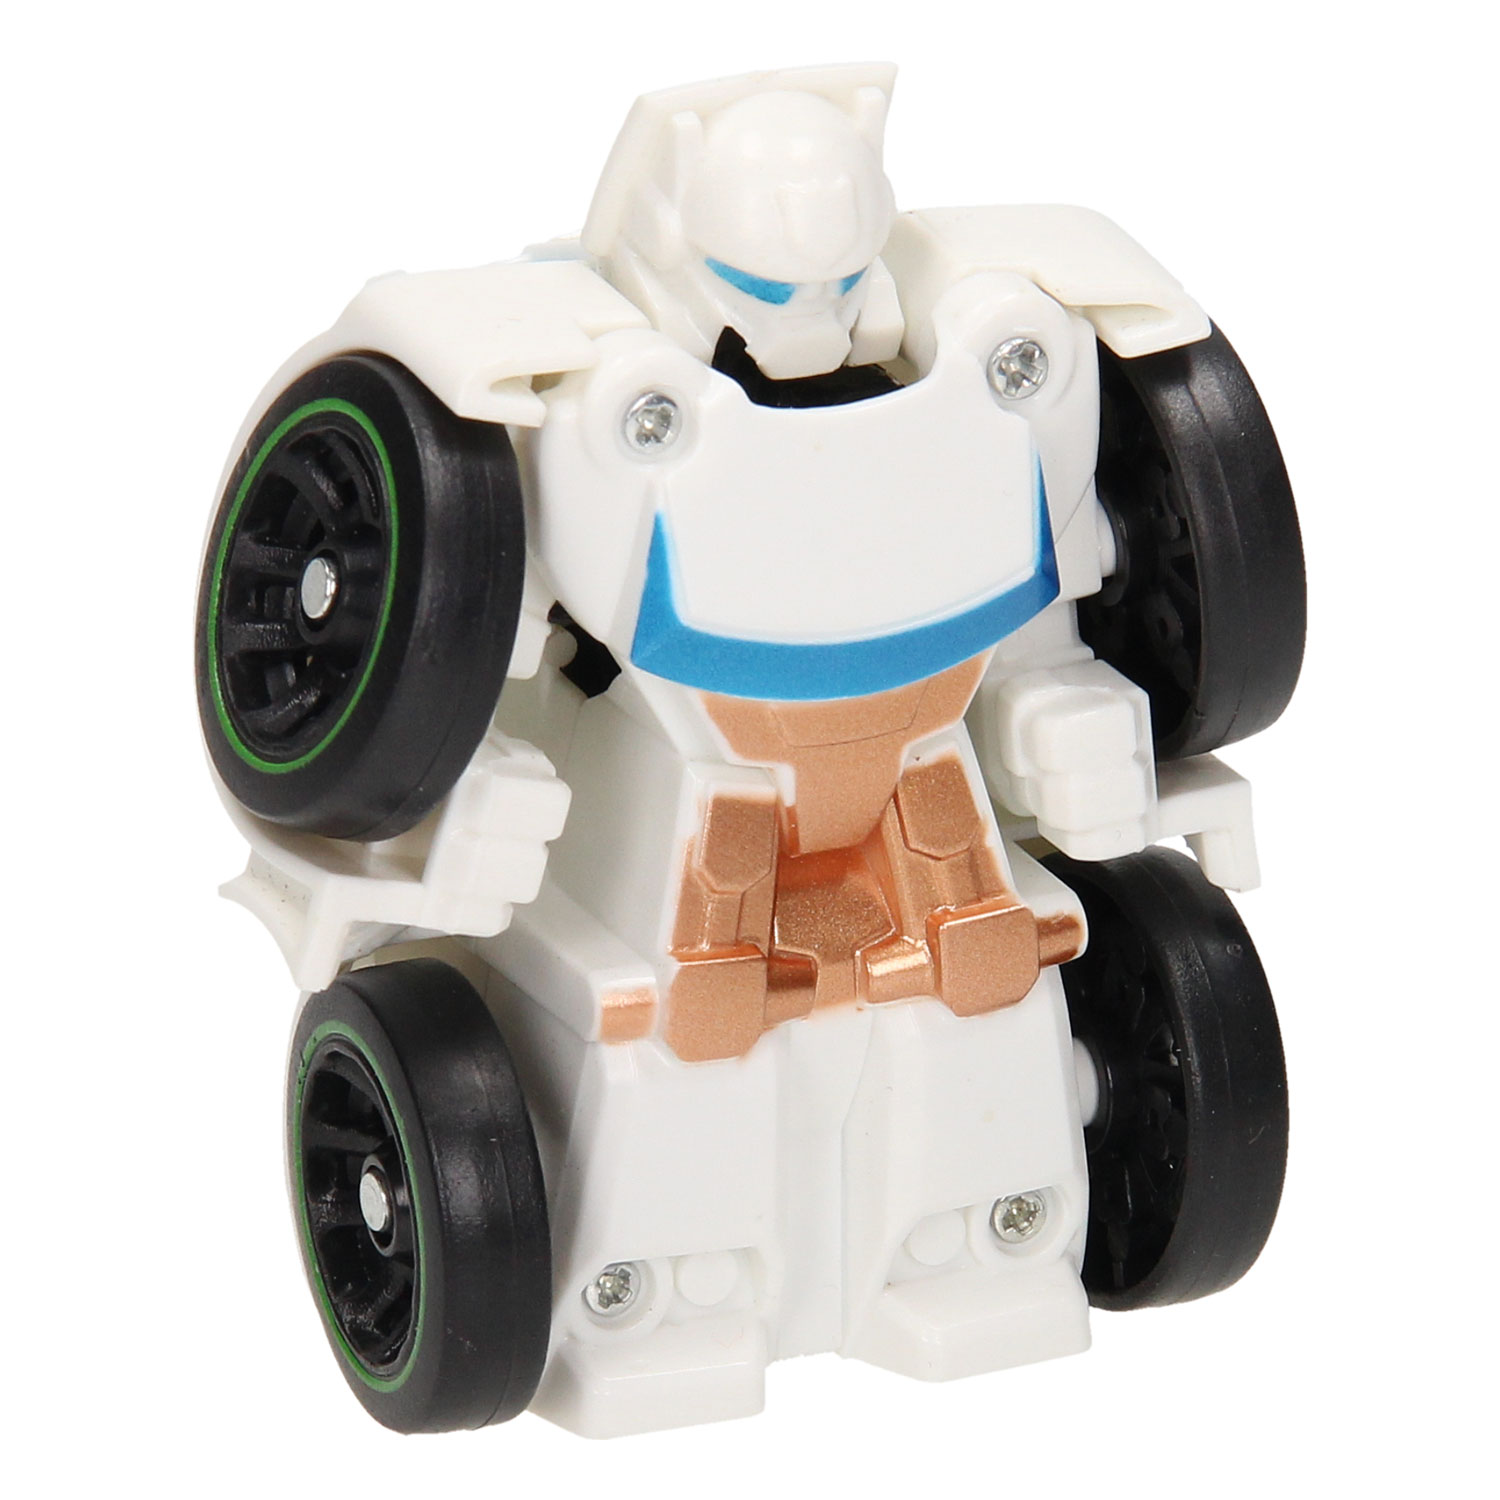 Max Robot Transform Car – Polizei